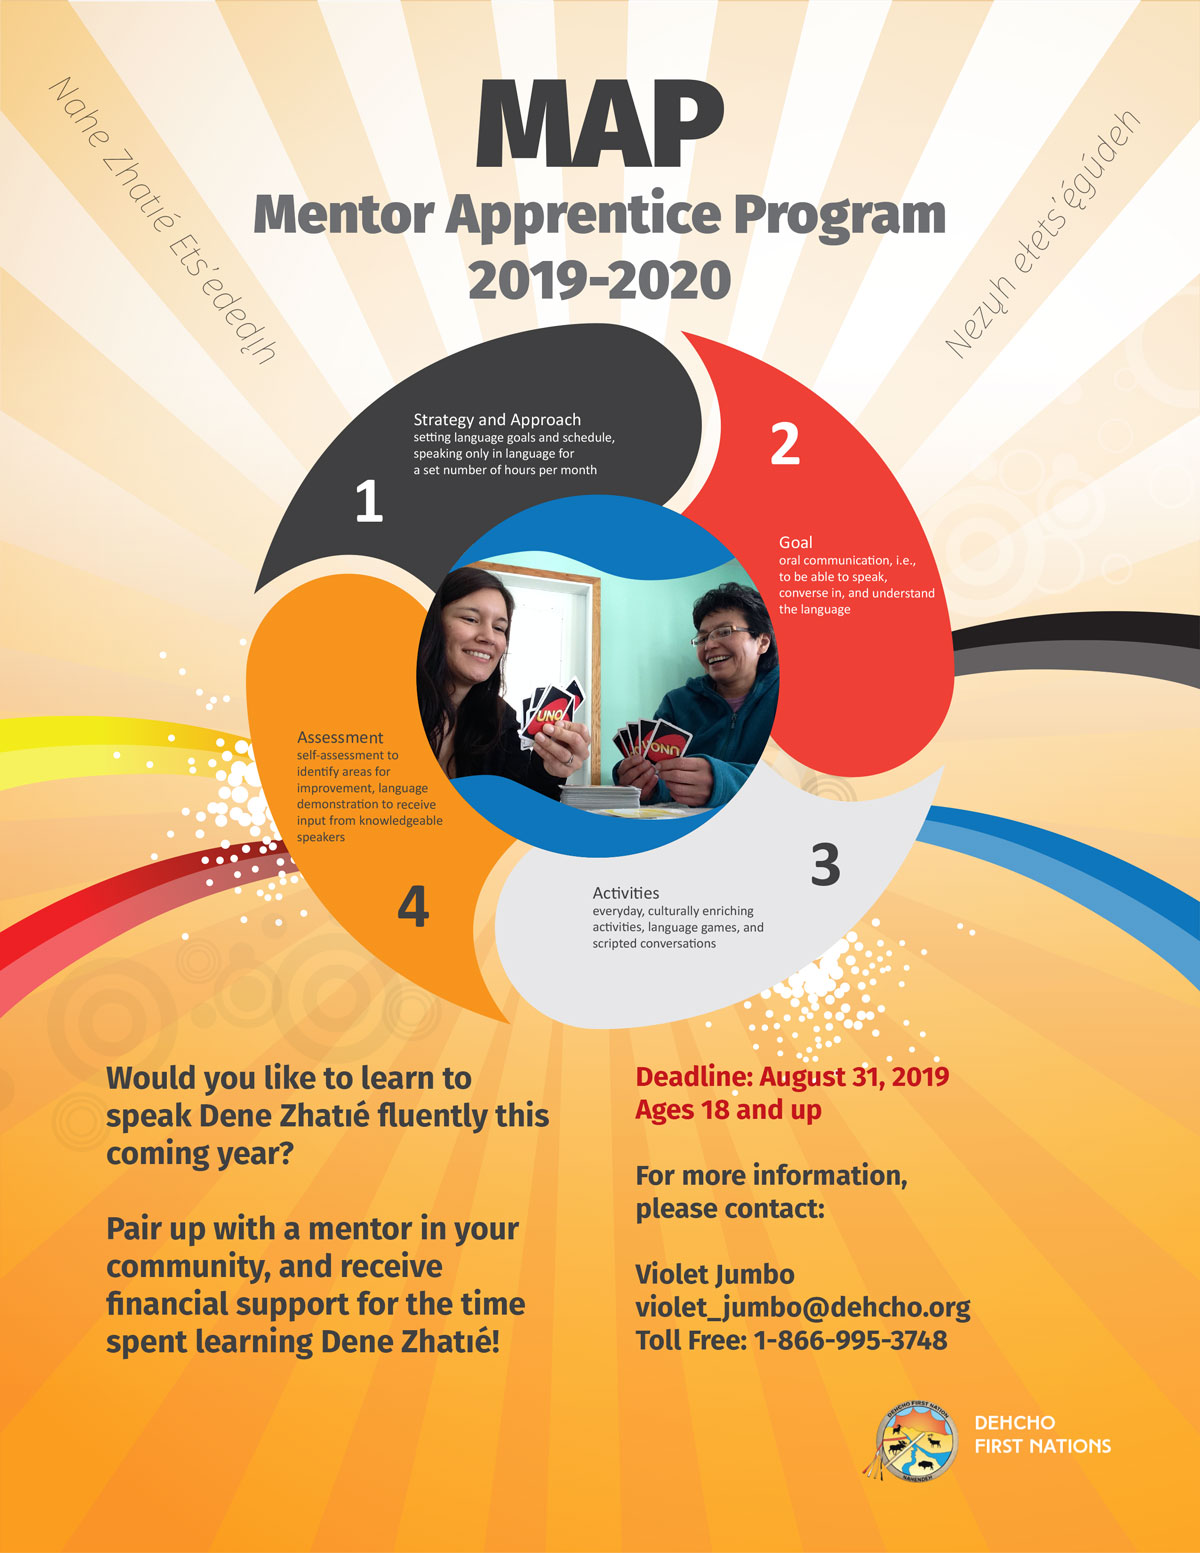 Mentor-Apprentice Program (MAP) - Dehcho First Nations